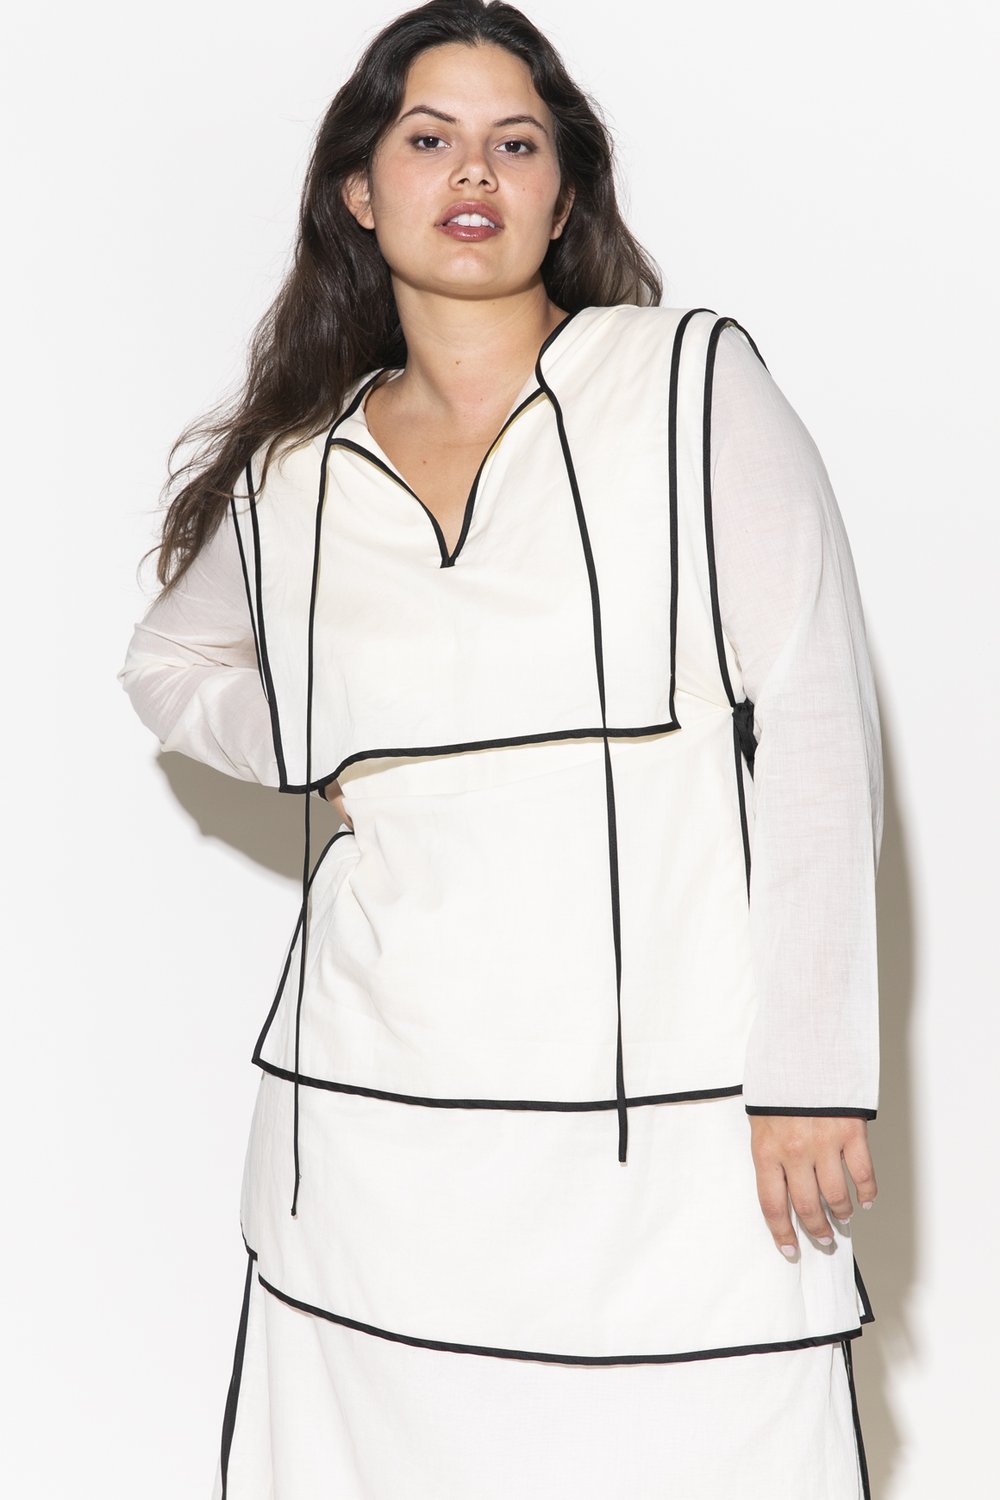 TORY BURCH White & Black Bib Dress (Sz. 12) — MOSS Designer Consignment